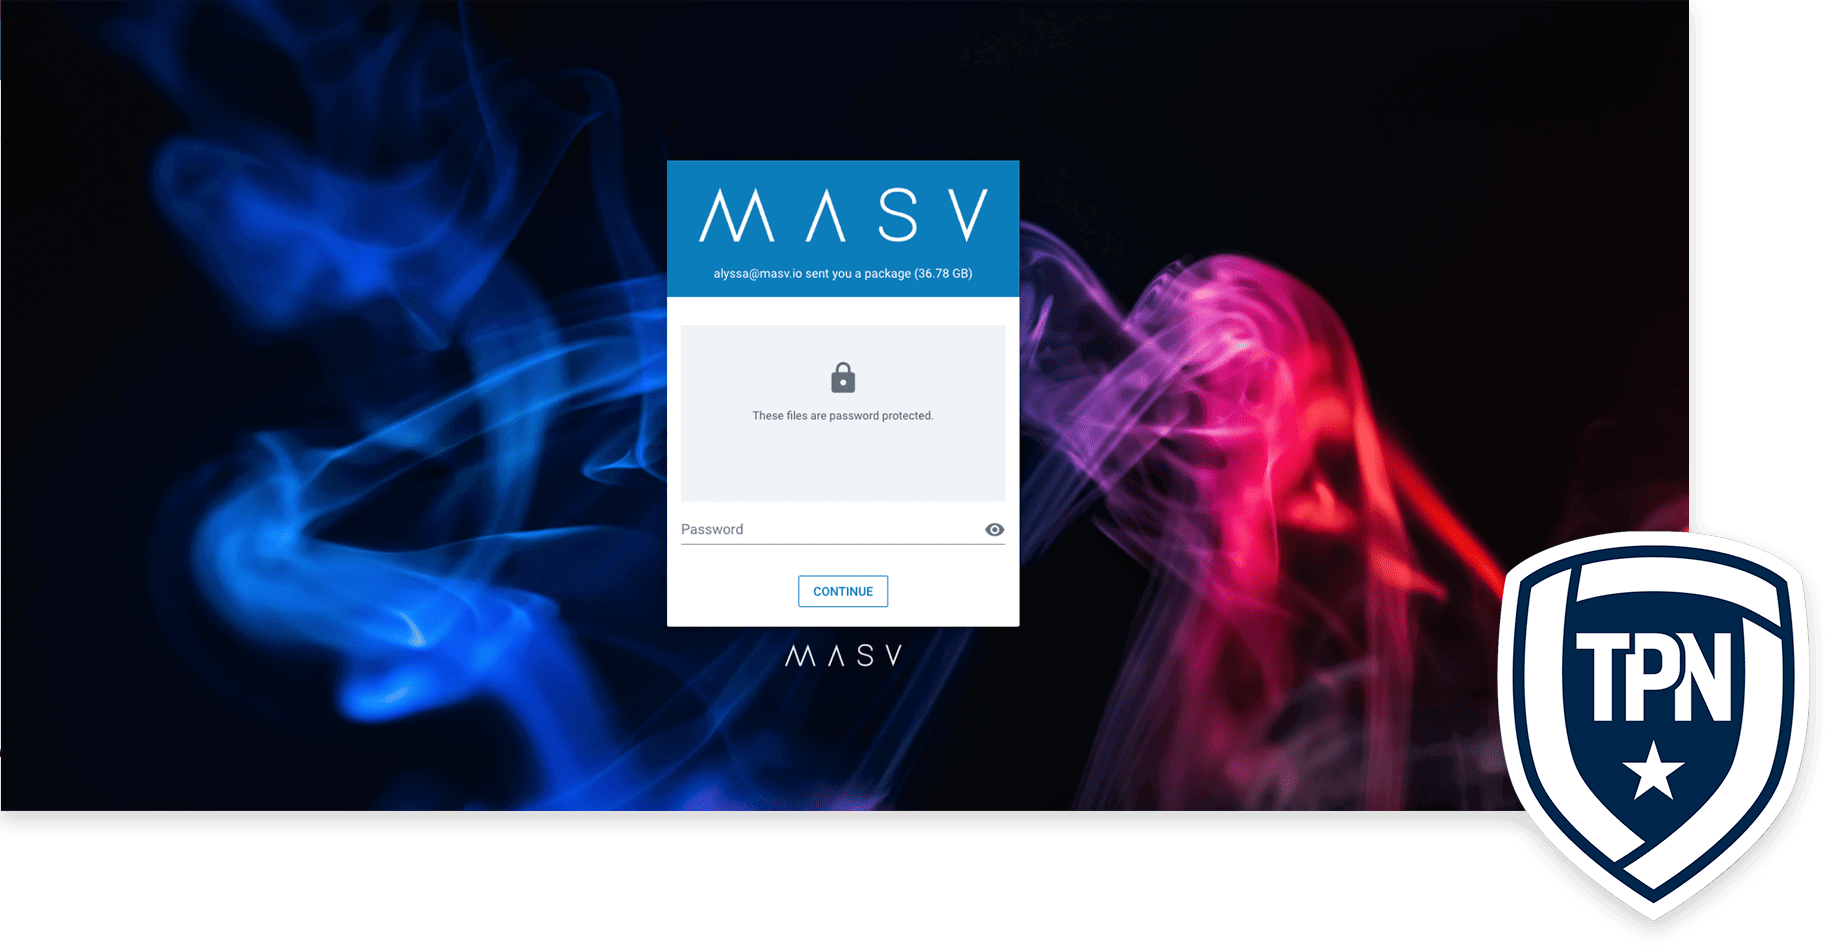 MASV secure file transfer